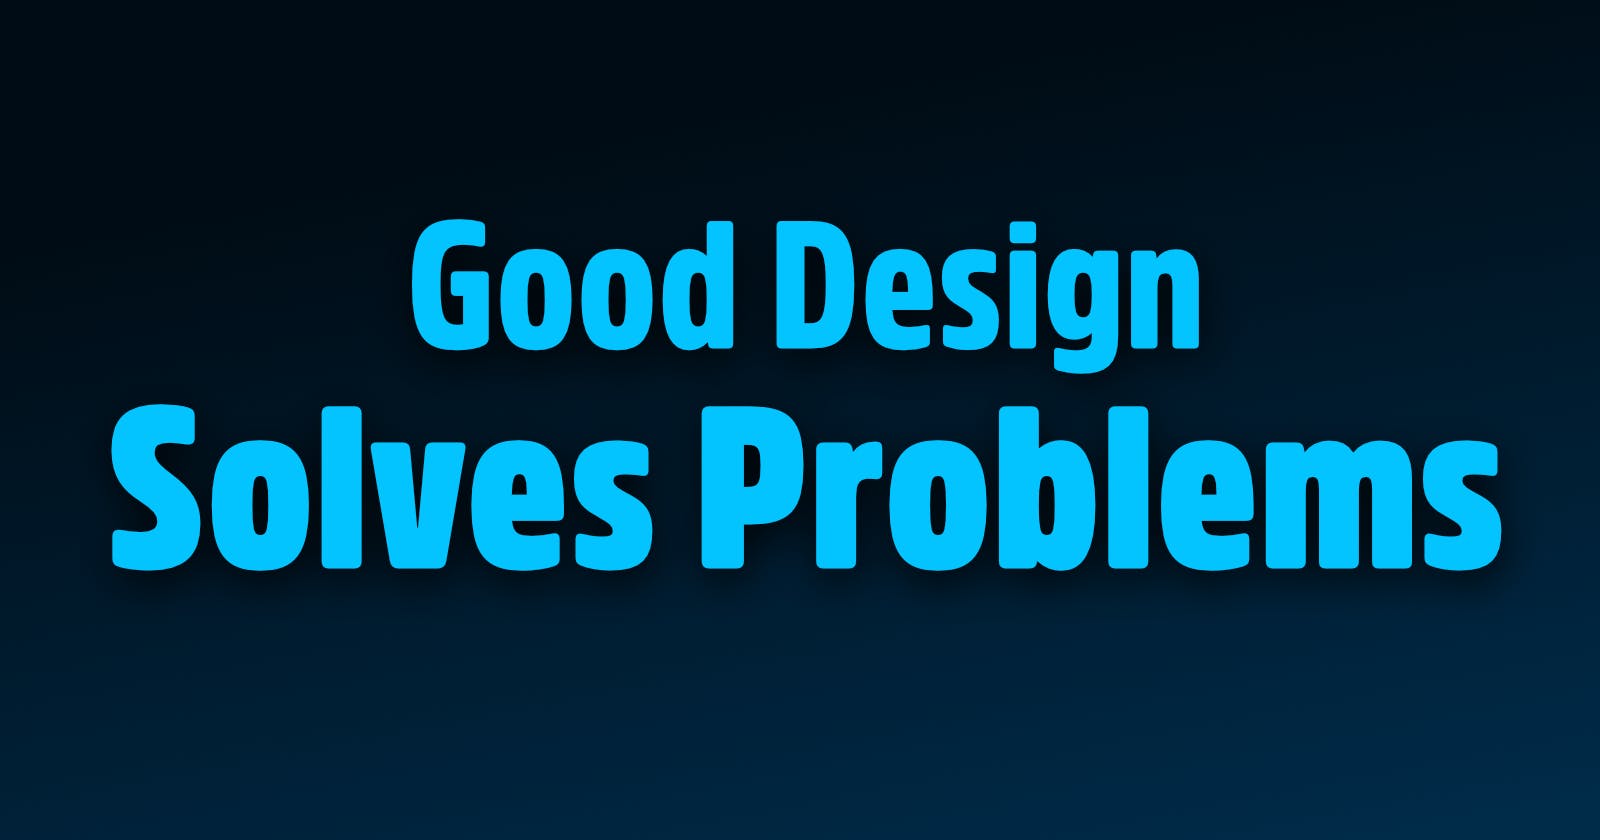 Good Design Solves Problems